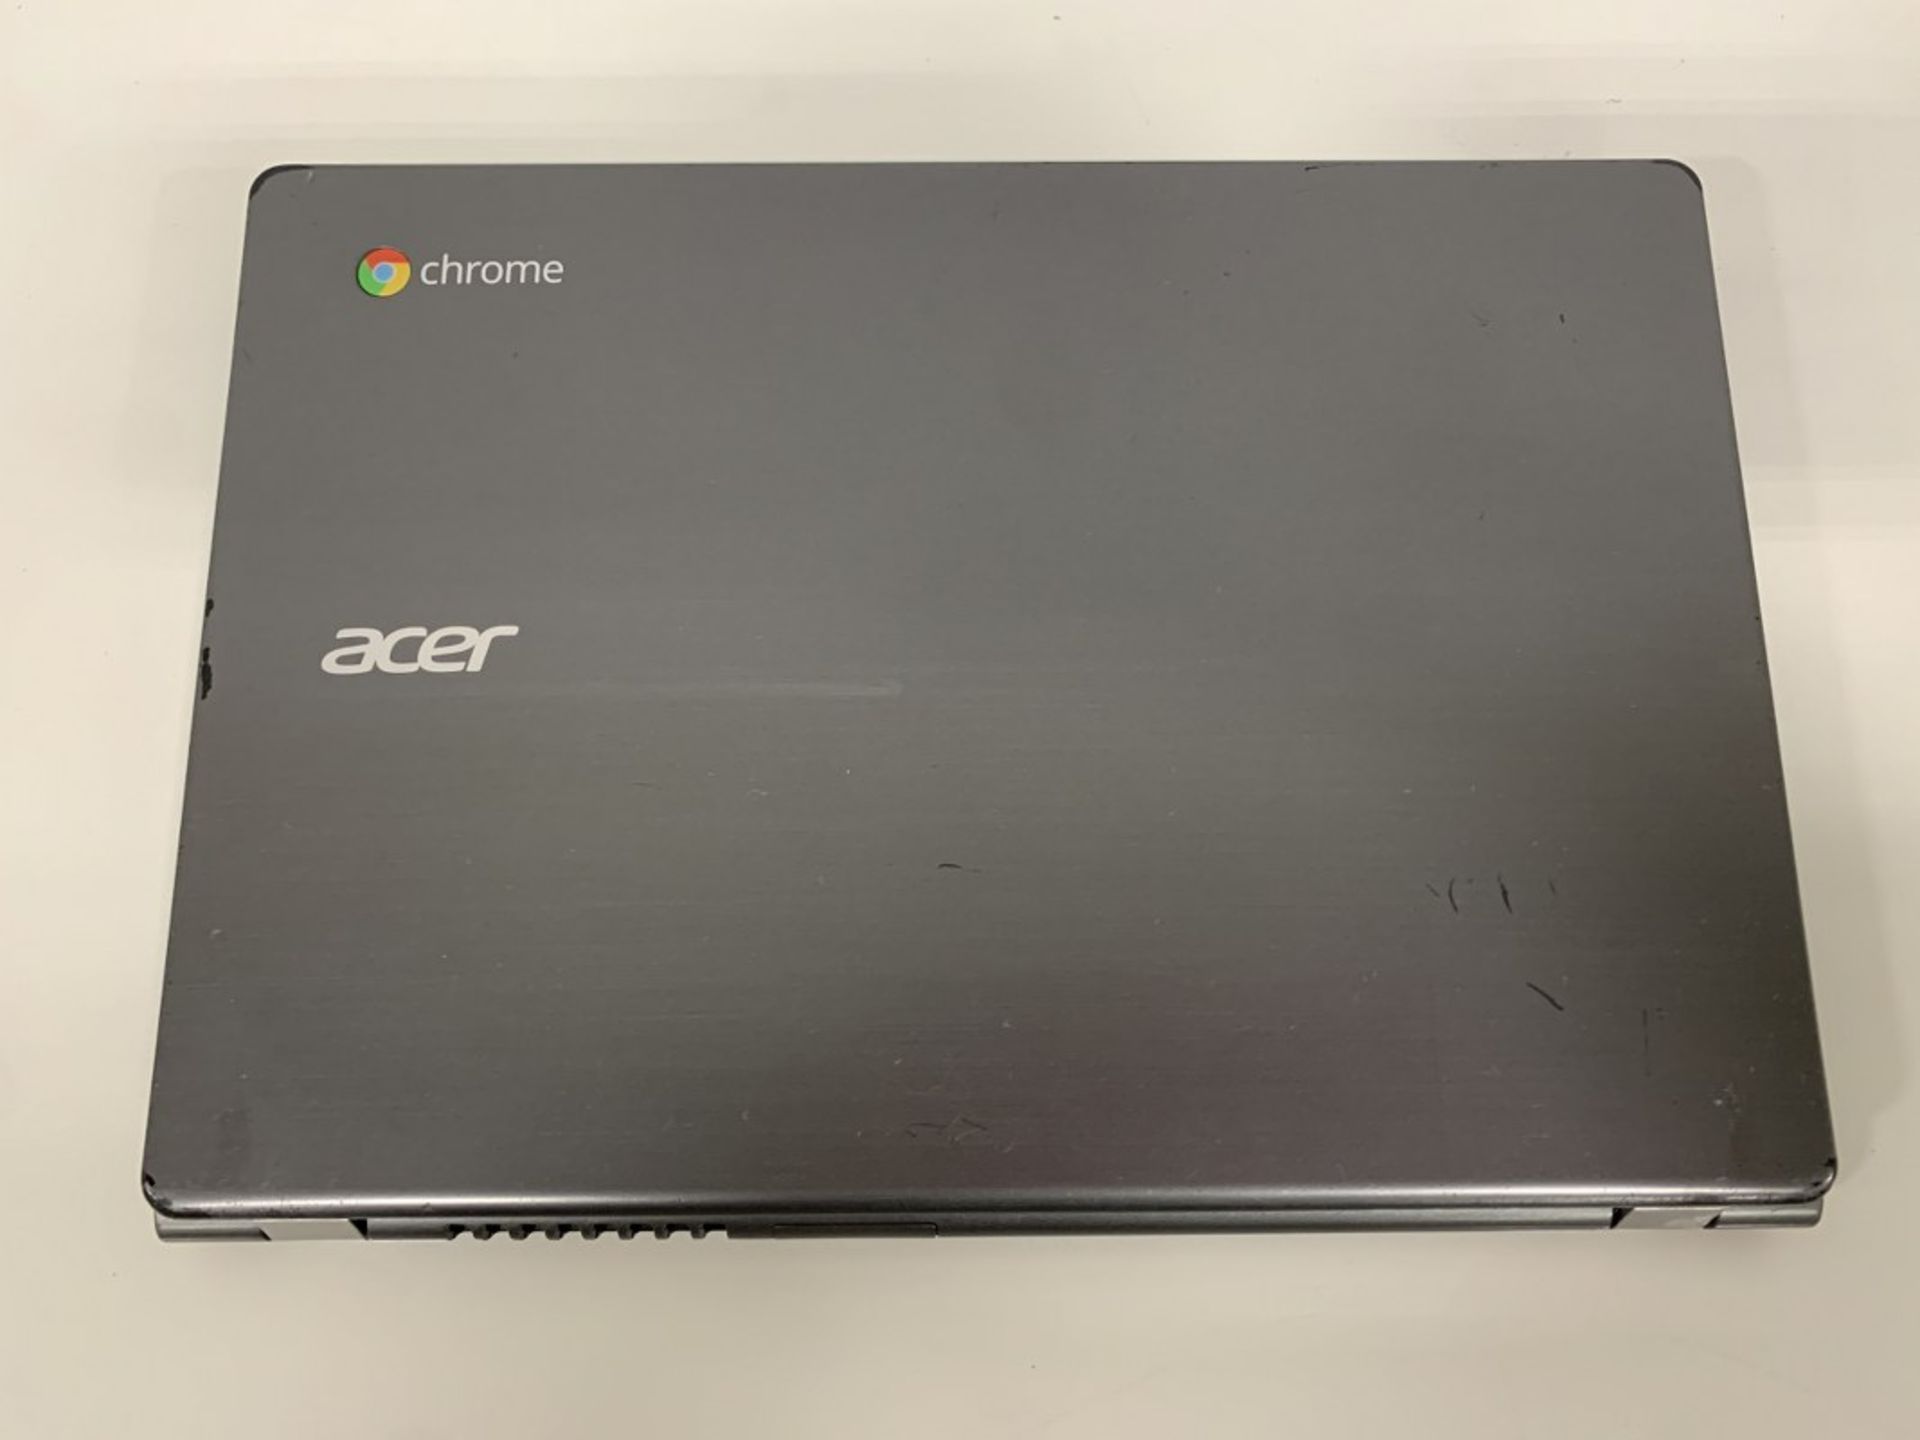 Acer - Chromebook 11 C740-C4PE (11.6-inch HD, 4 GB, 16GB SSD) - Image 3 of 3